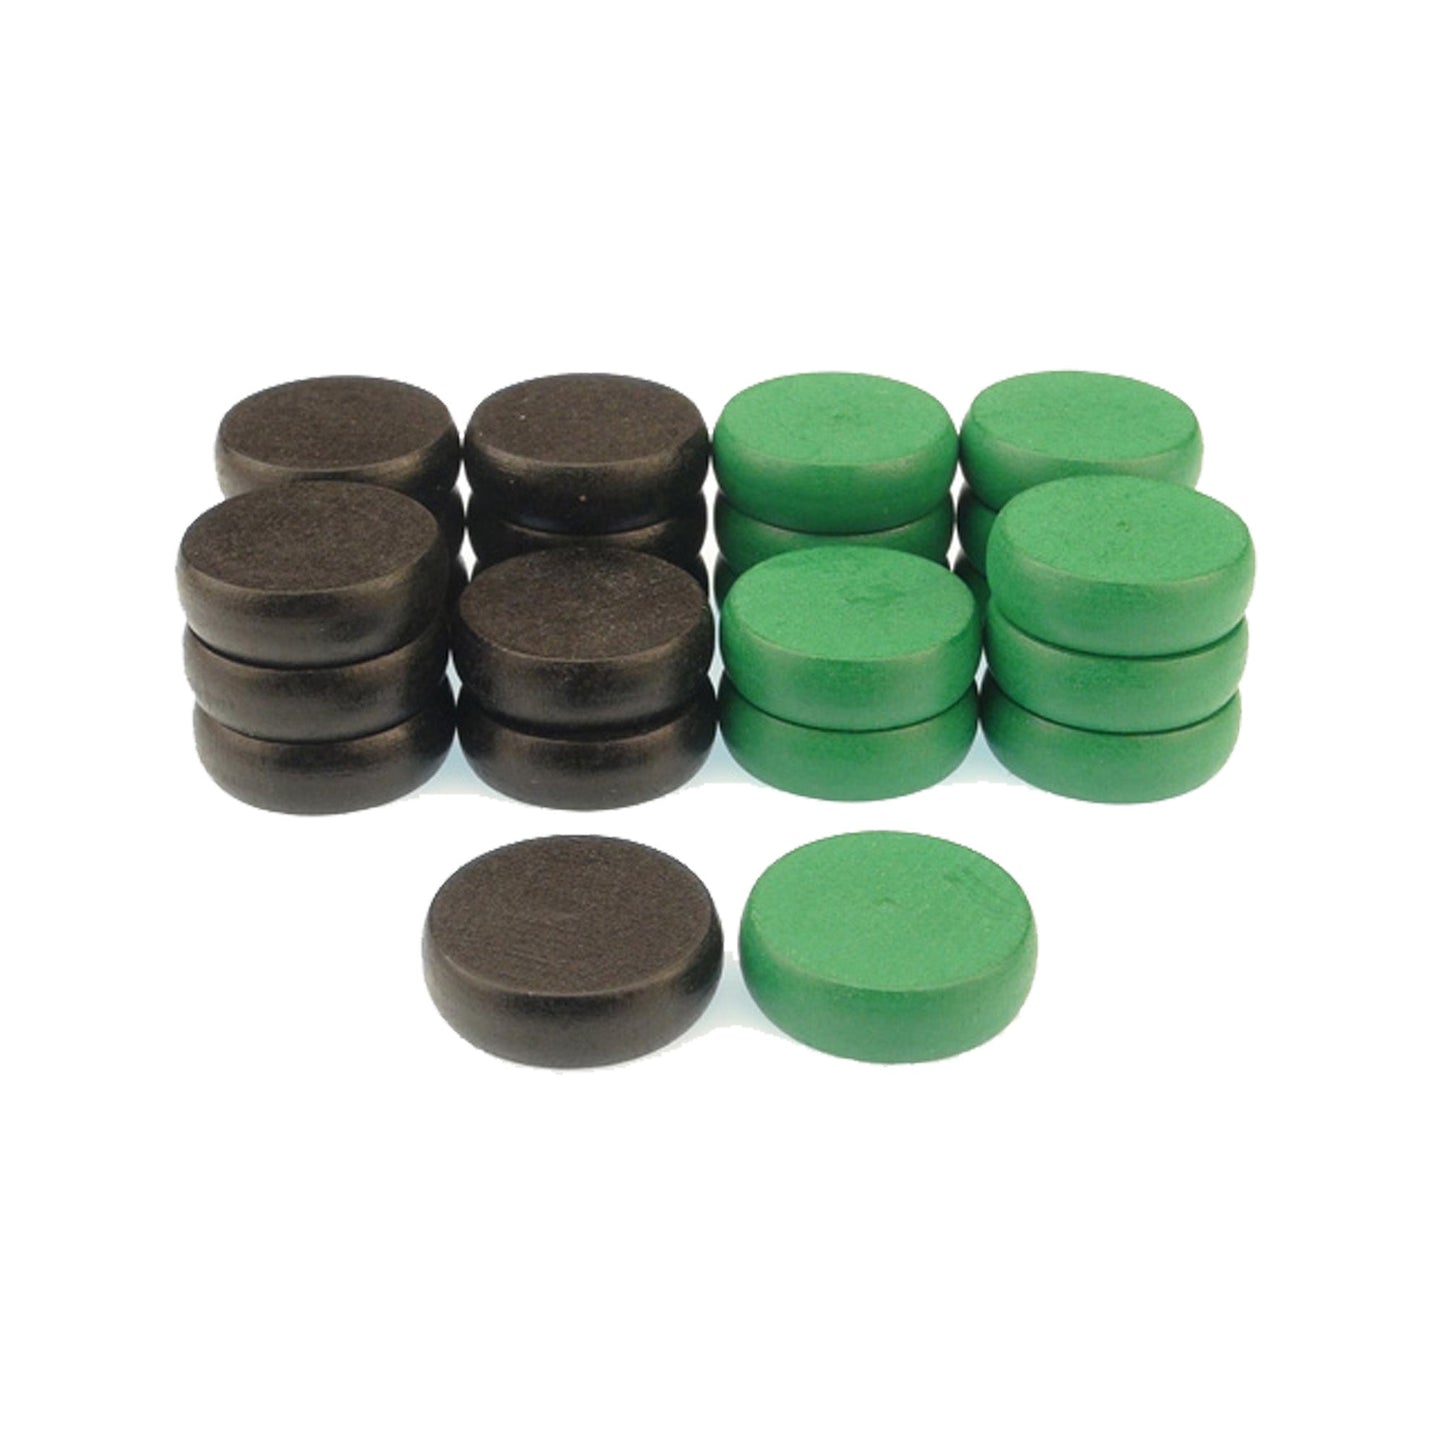 26 Black & Green Crokinole Tournament Discs + Bag (13 Black & 13 Green) - Crokinole Europe